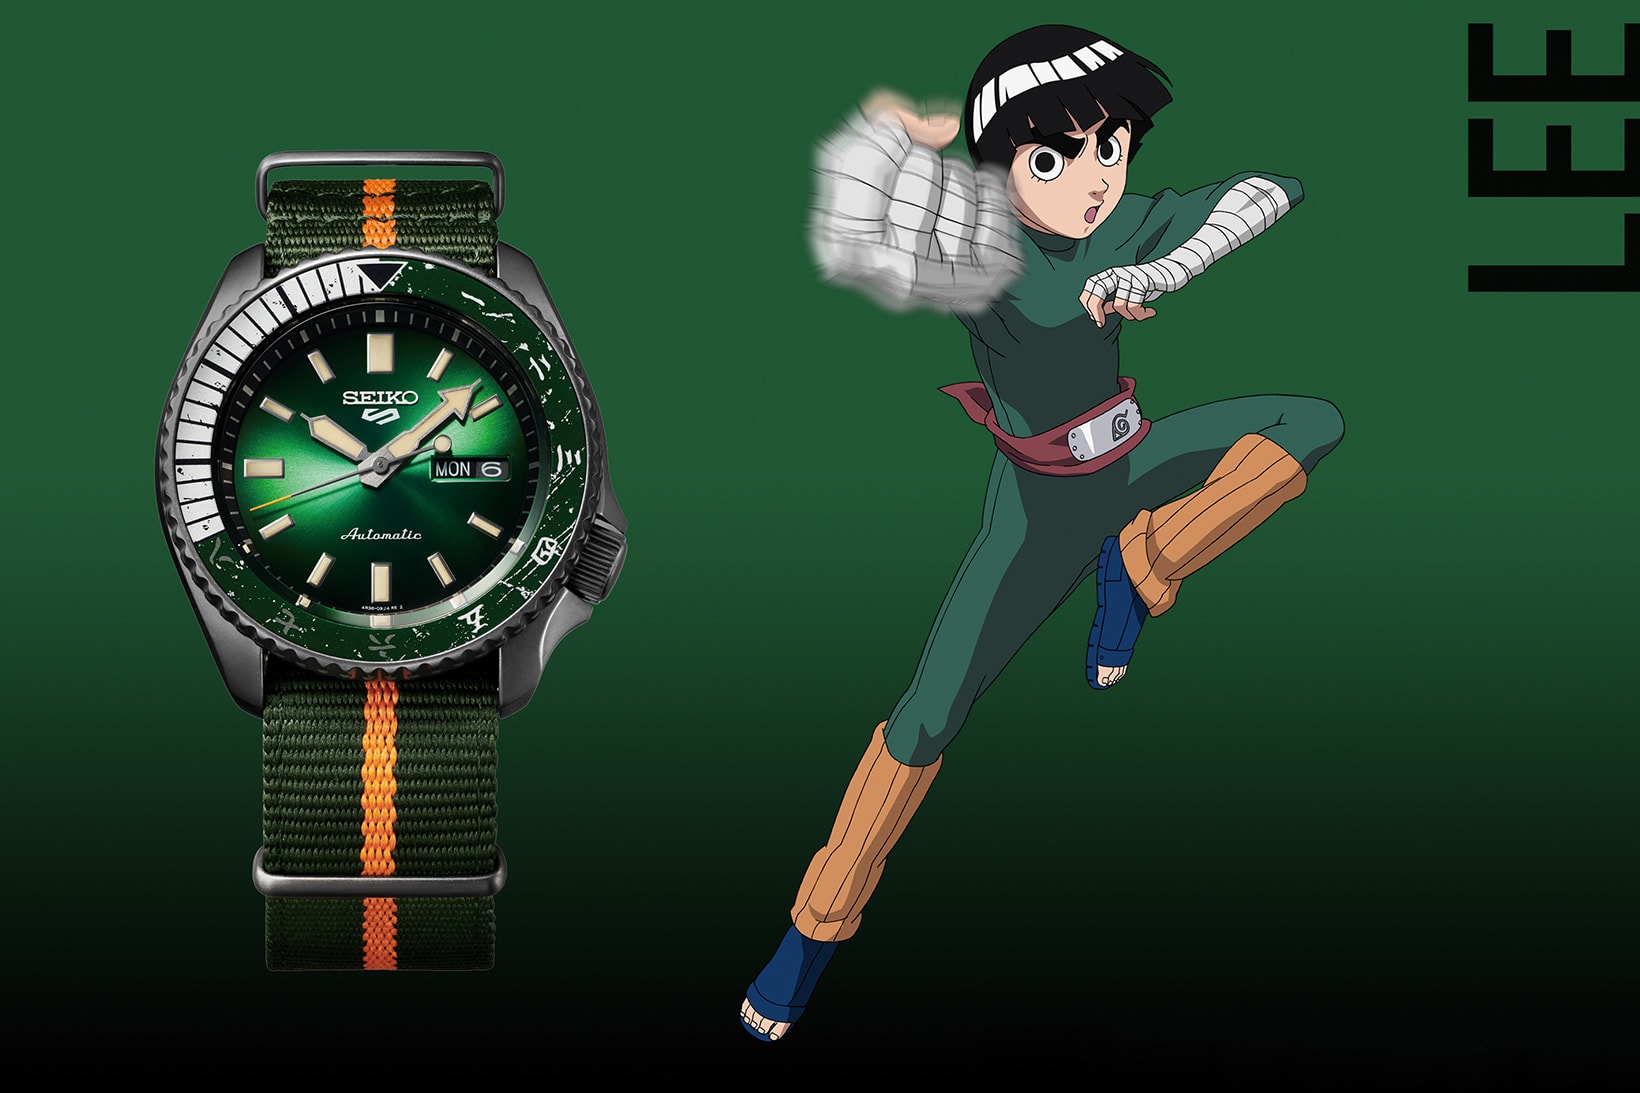 seiko 5 sports naruto themed watches boruto sasuke gaara limited edition anime manga accessories release info 